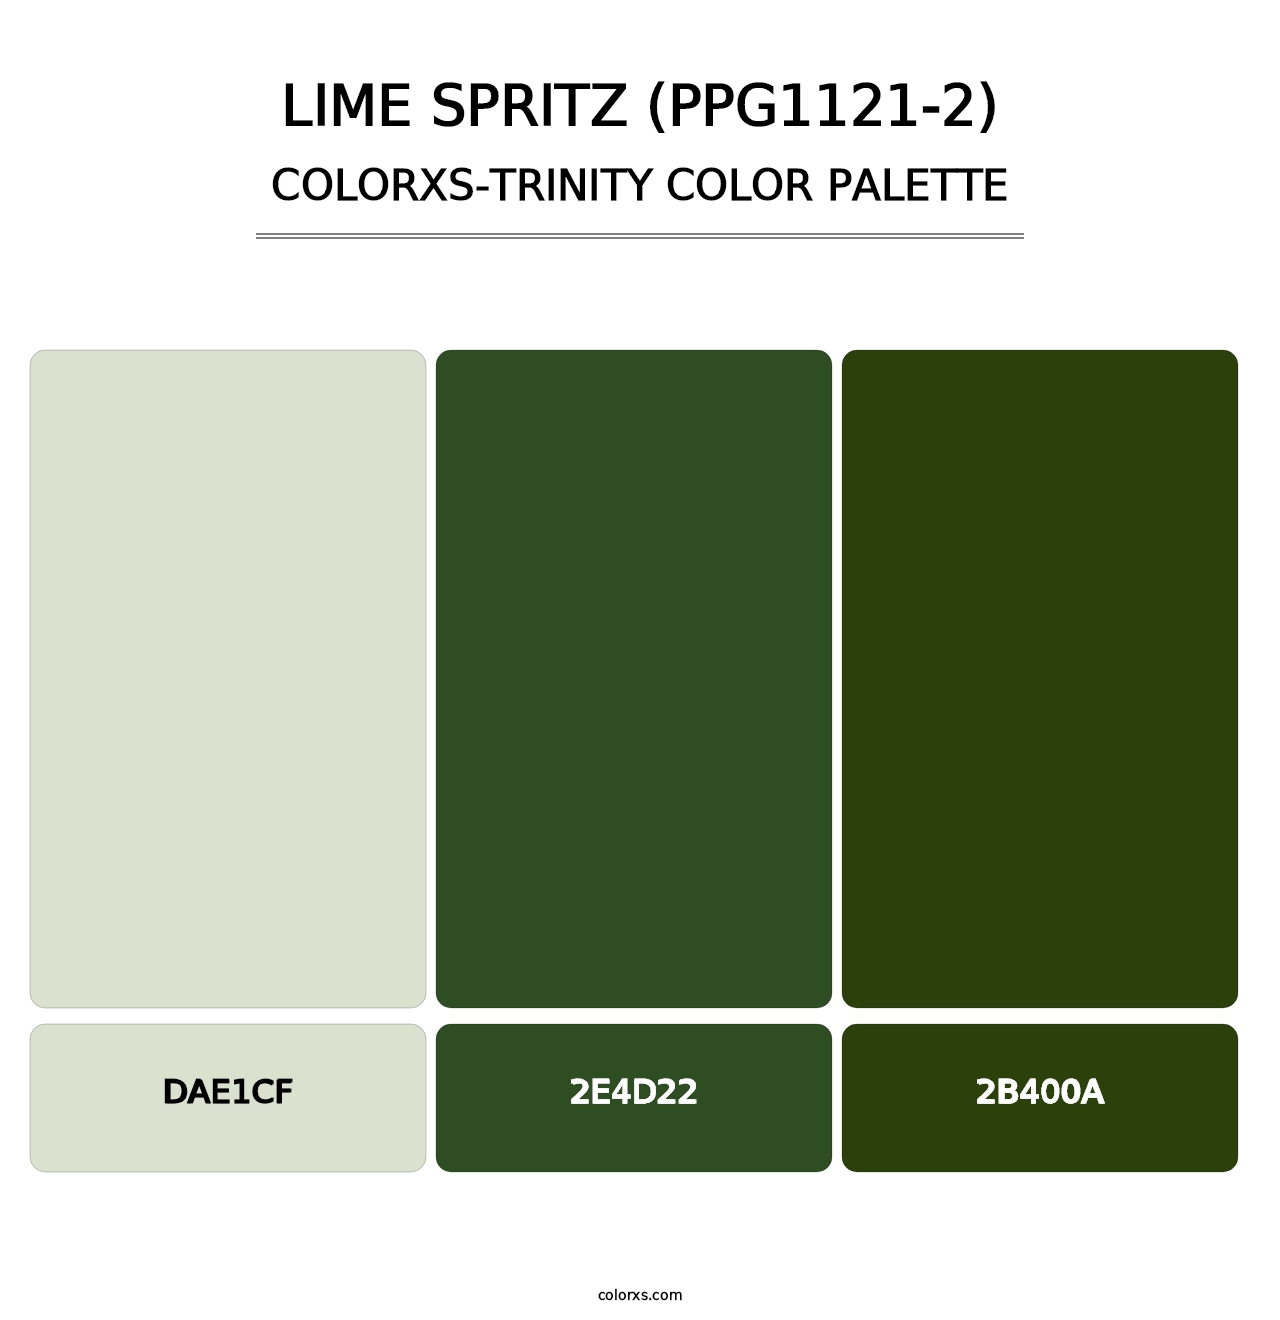 Lime Spritz (PPG1121-2) - Colorxs Trinity Palette